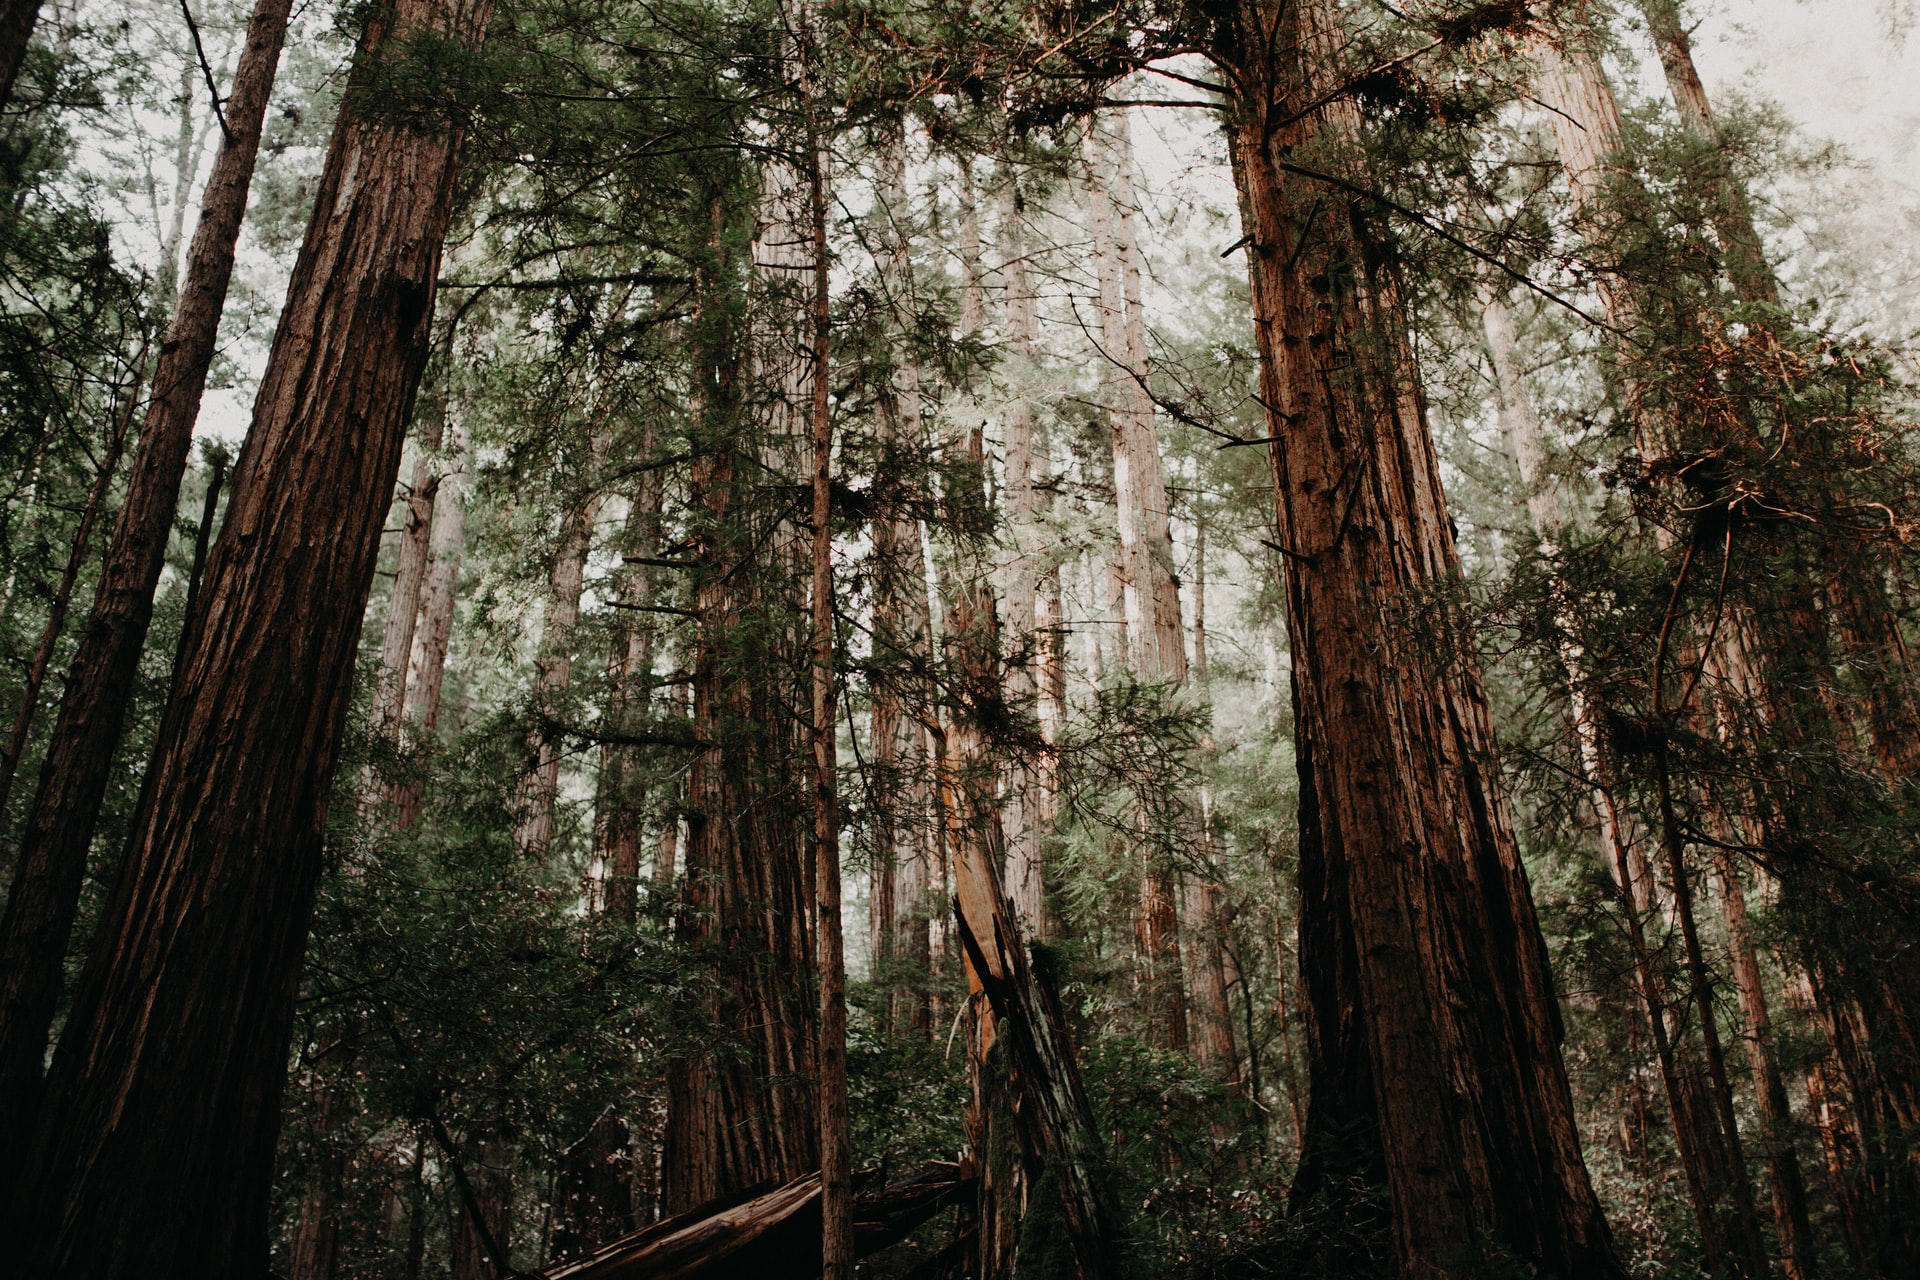 Redwood trees growing tall in Muir Woods near SF